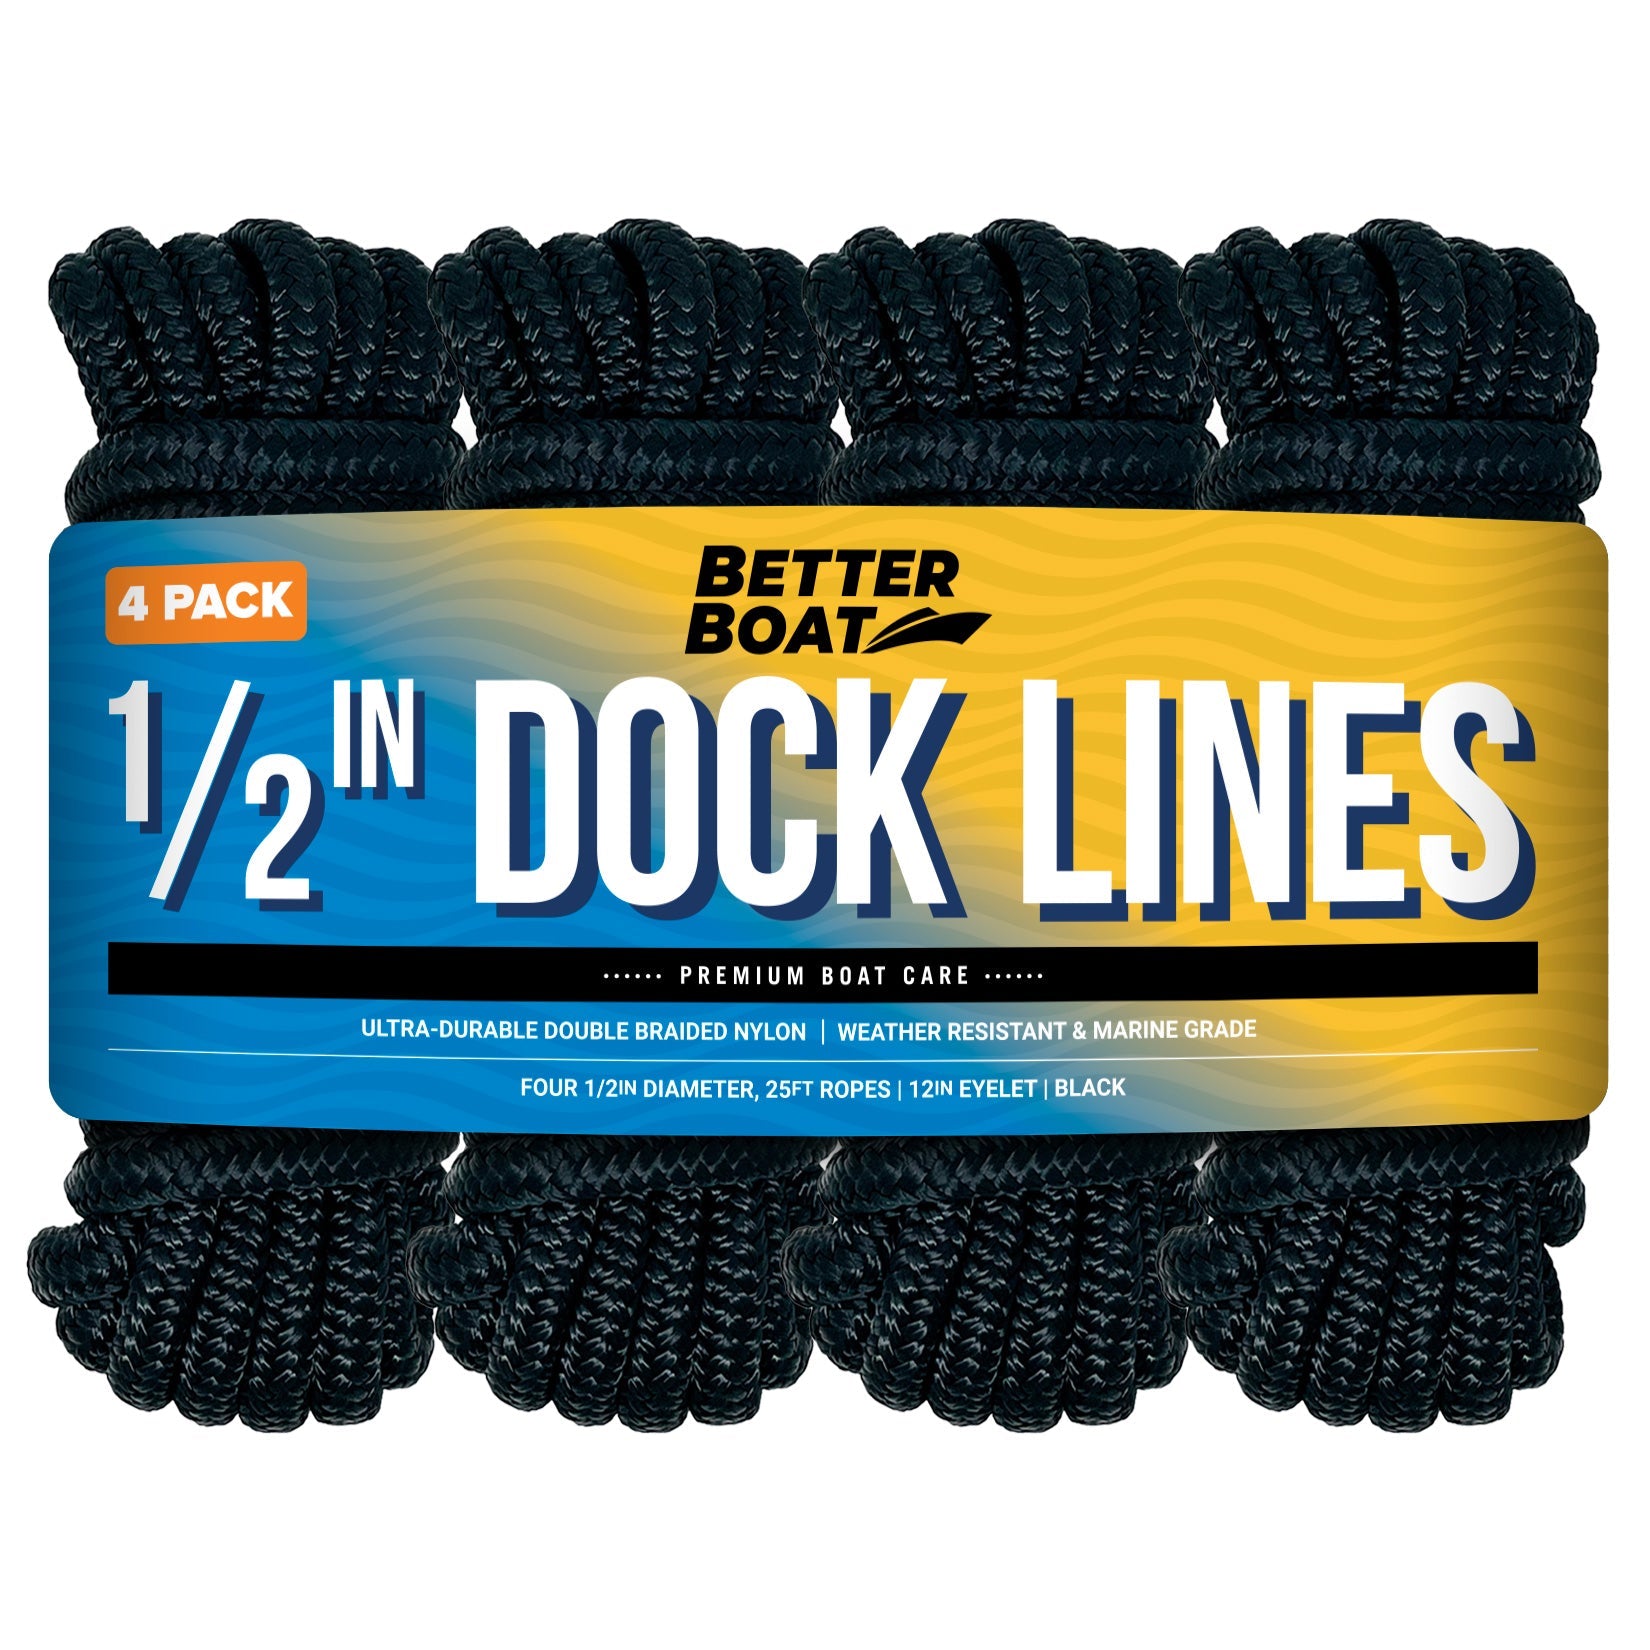 Better Boat black dock lines